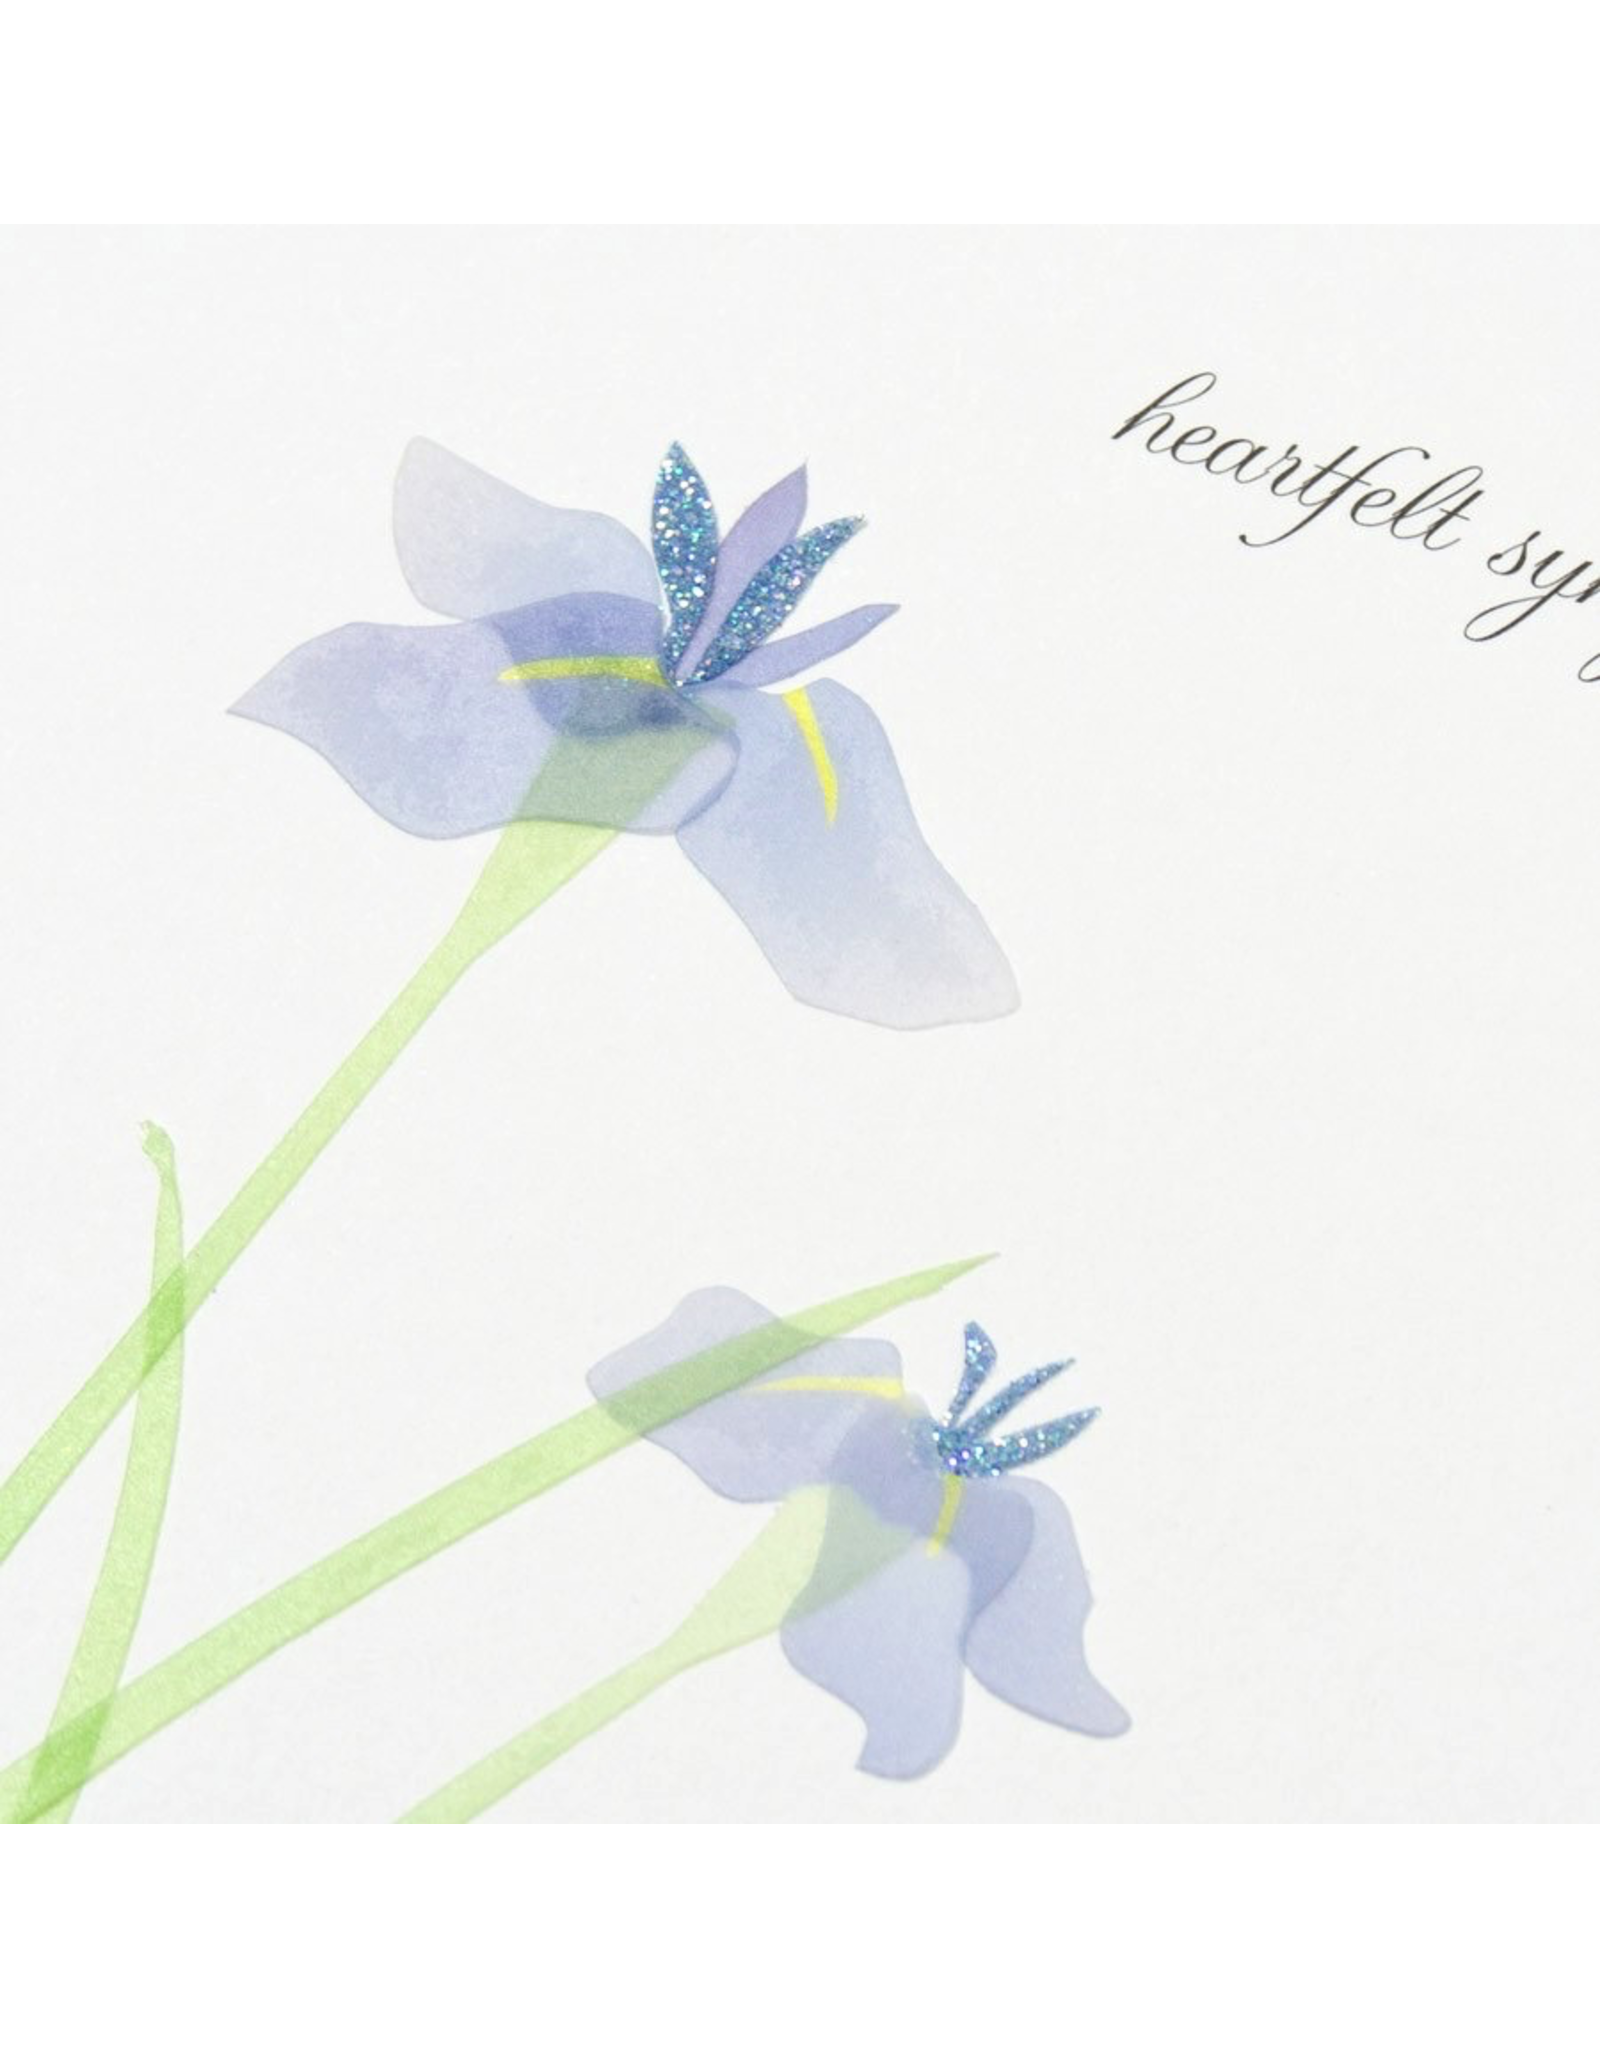 PAPYRUS® Sympathy Card Purple Irises